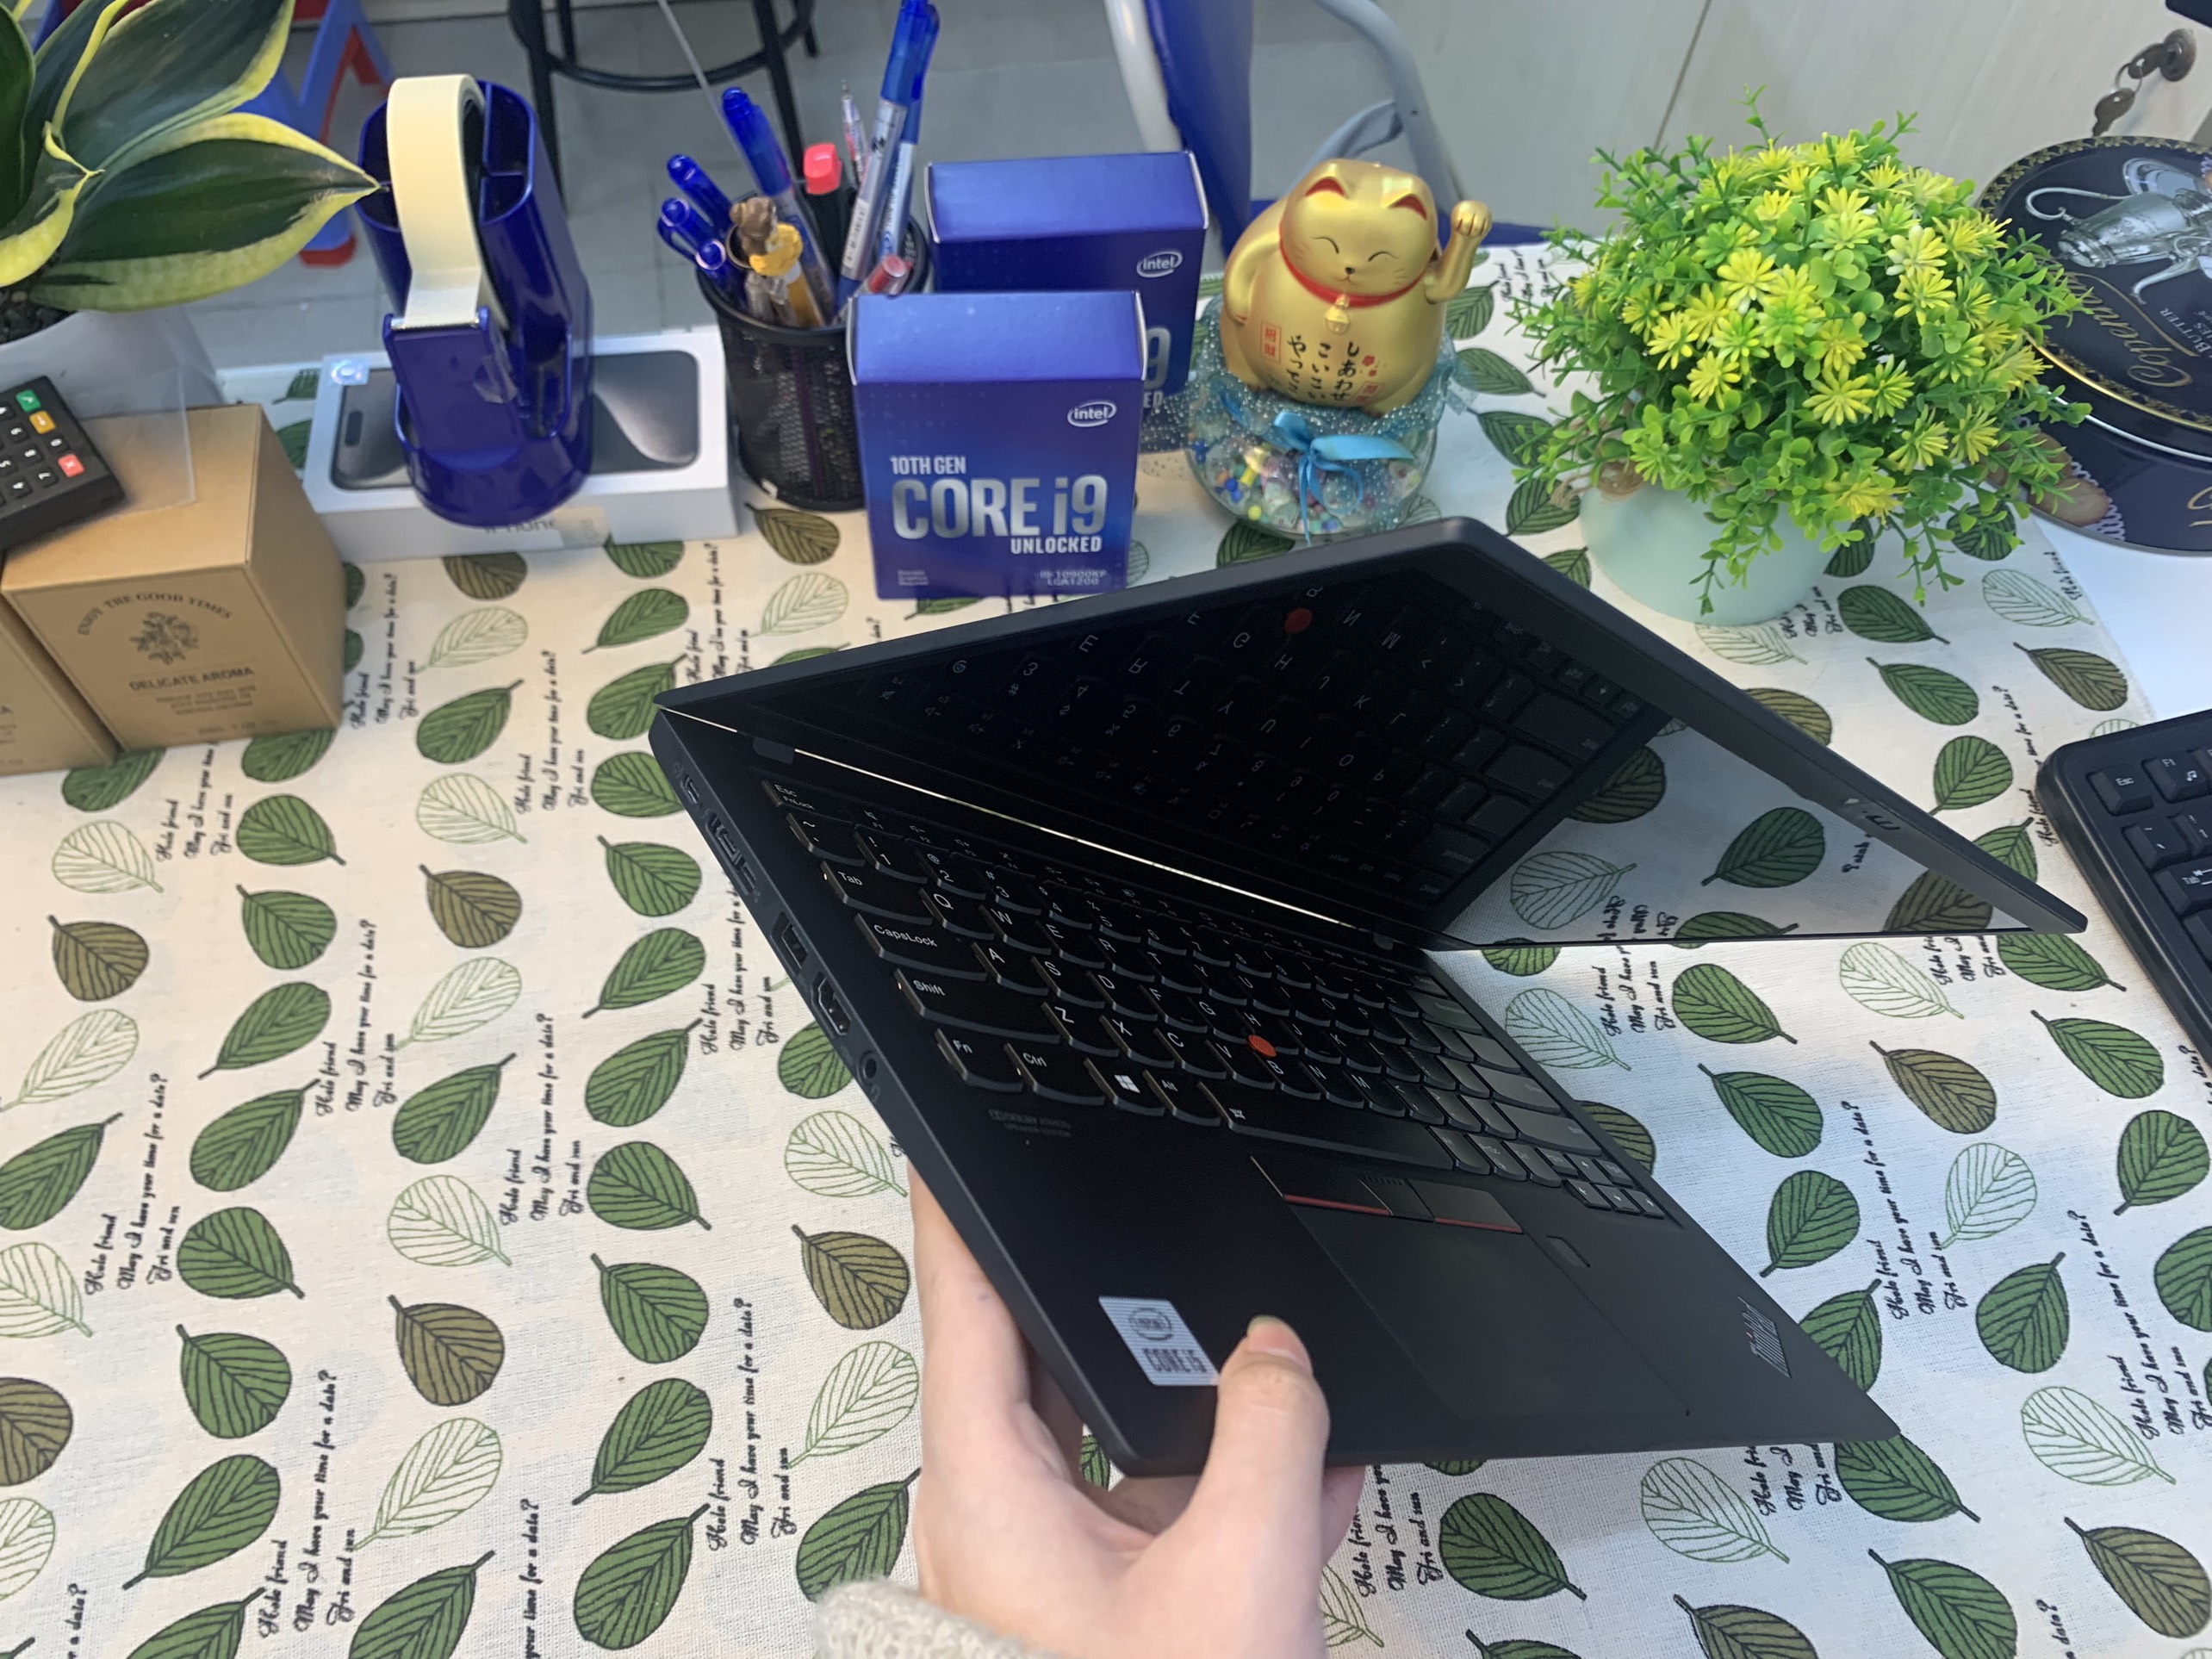 ThinkPad X1 Cacbon gen 8